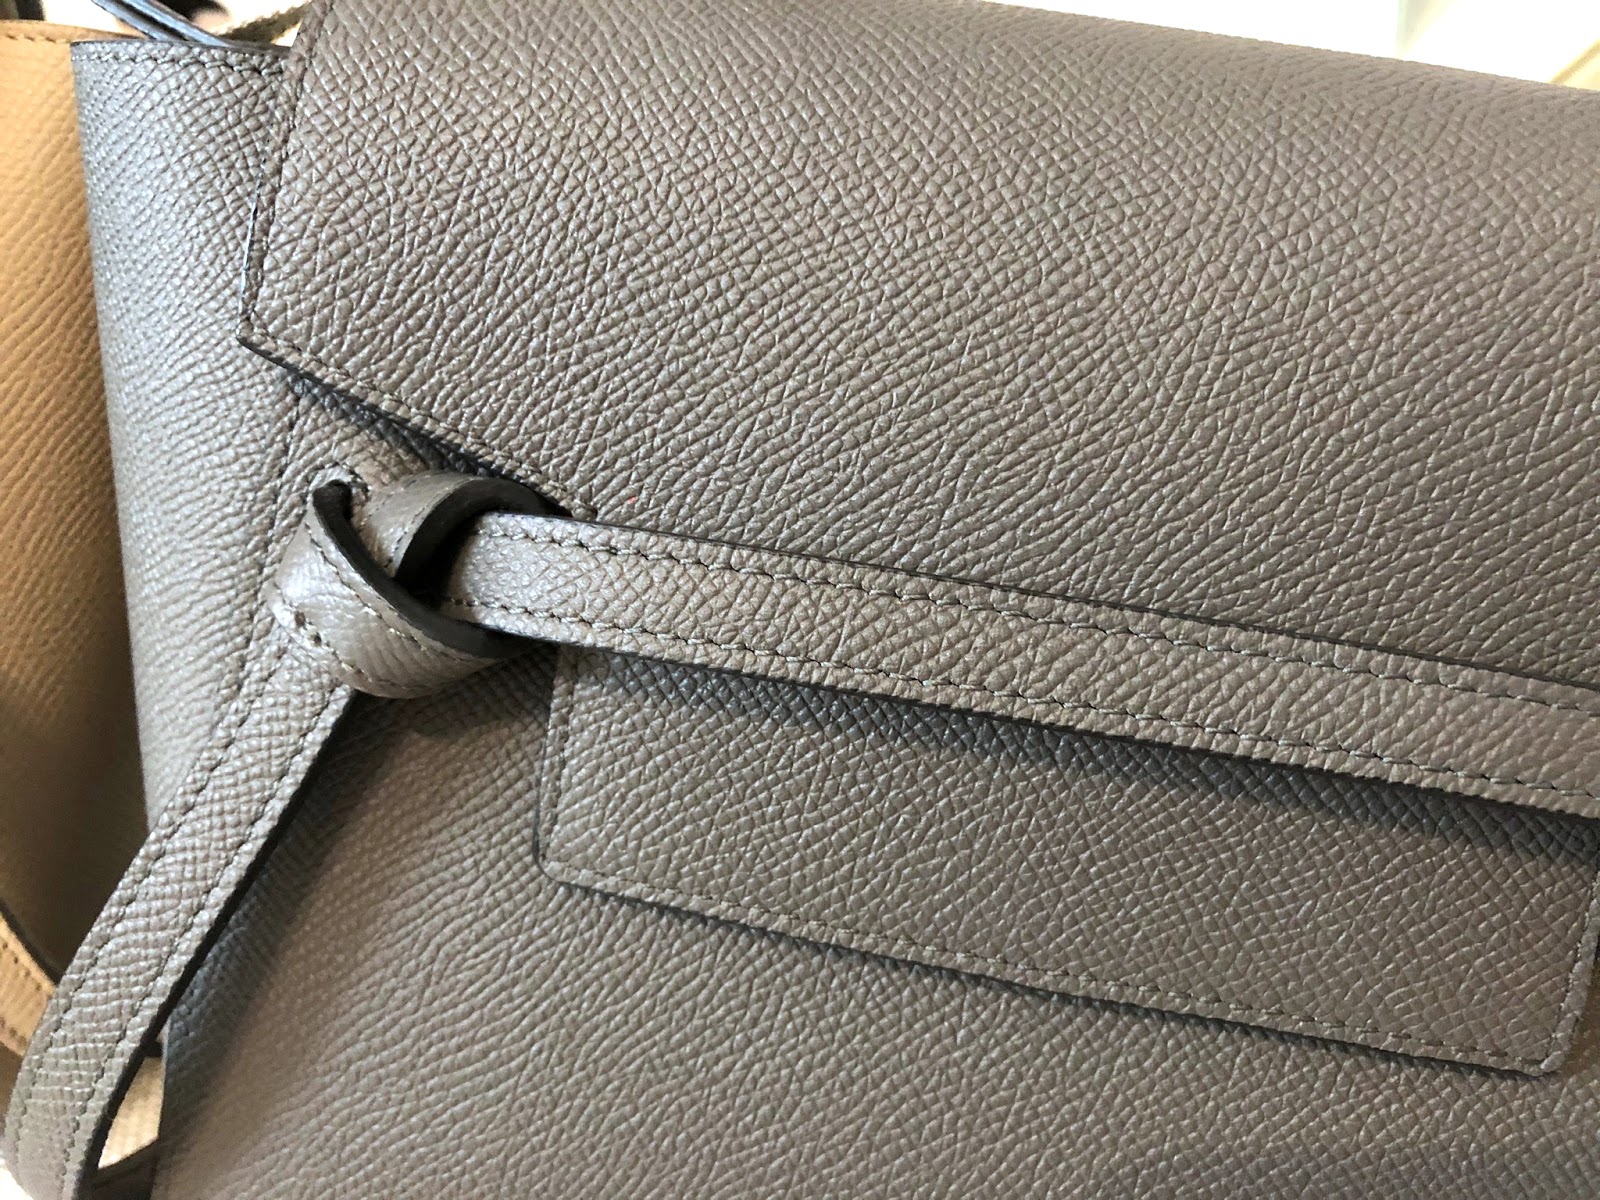 Celine Nano Belt Bag, Old Vs. New // Quality Difference? Hardware? New Logo?